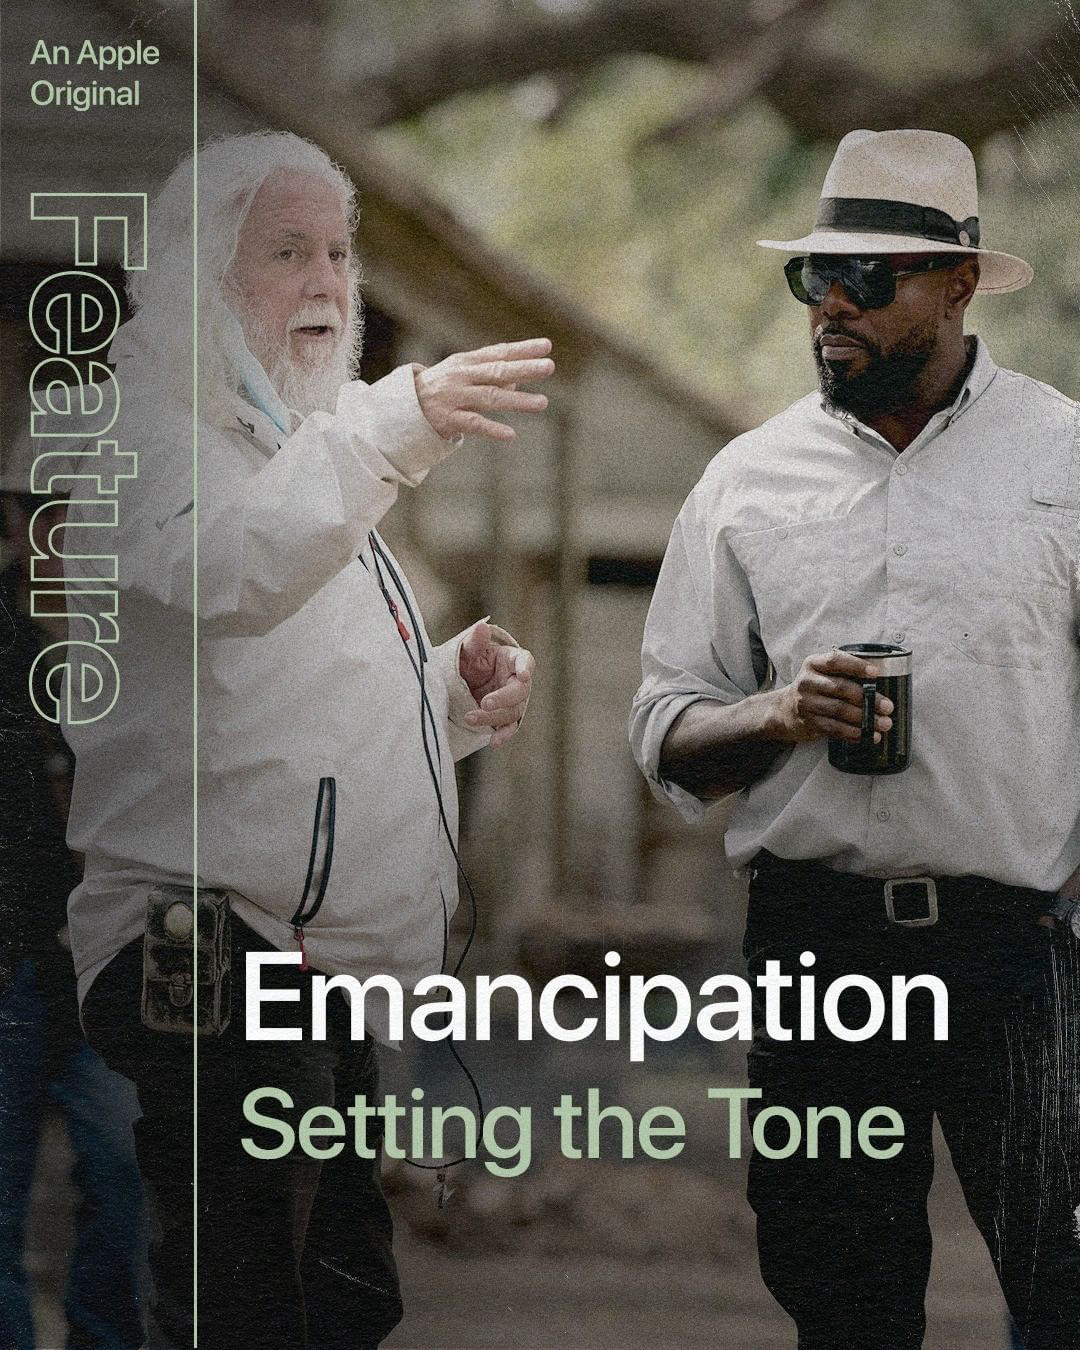 Apple TV+ - #Emancipation director Antoine Fuqua and cinematographer Robert Richardson discuss how t